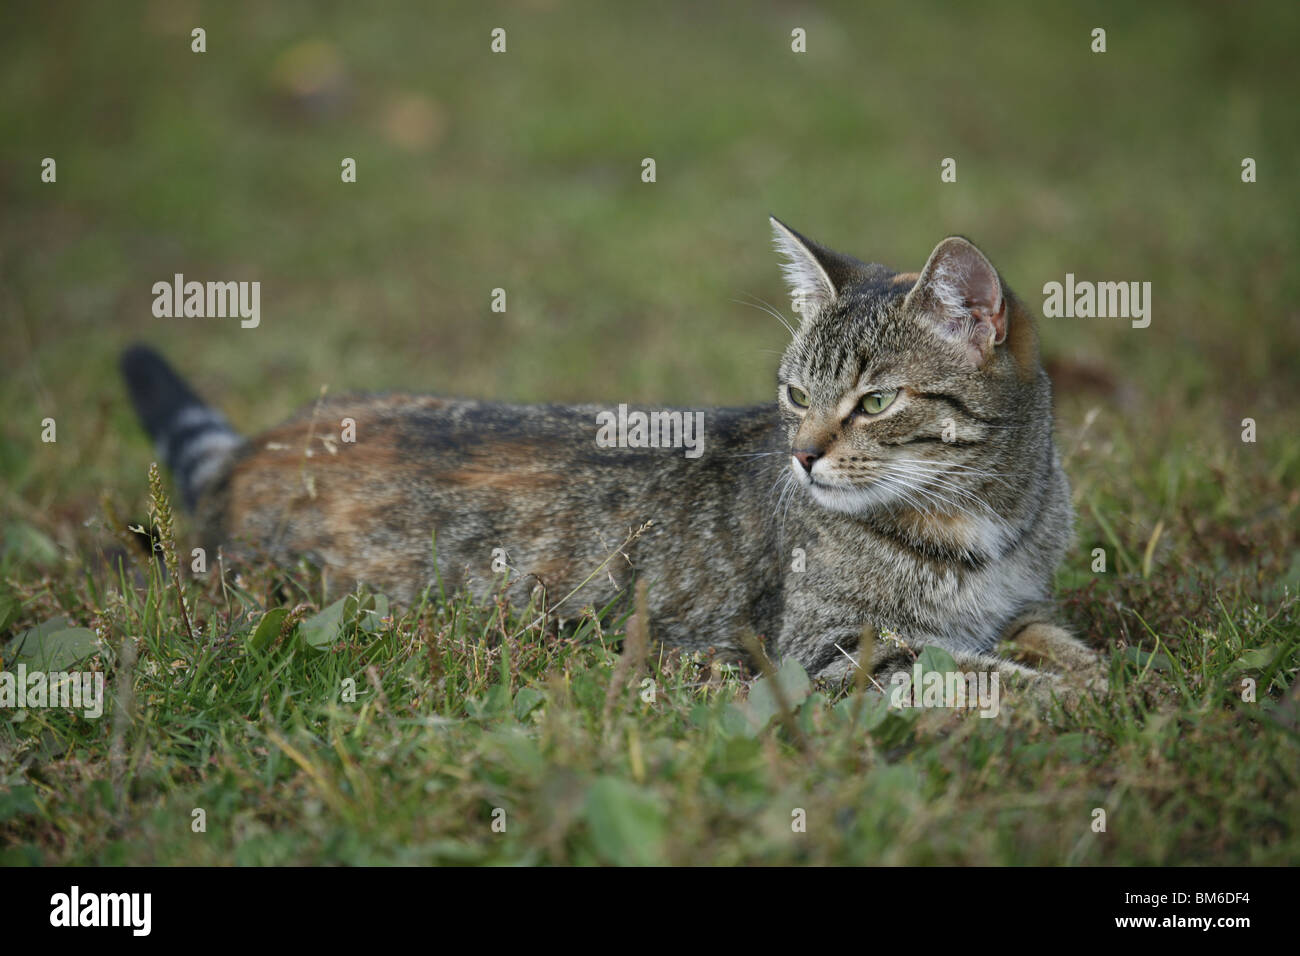 Katze liegt im Gras / cat lying in grass Banque D'Images